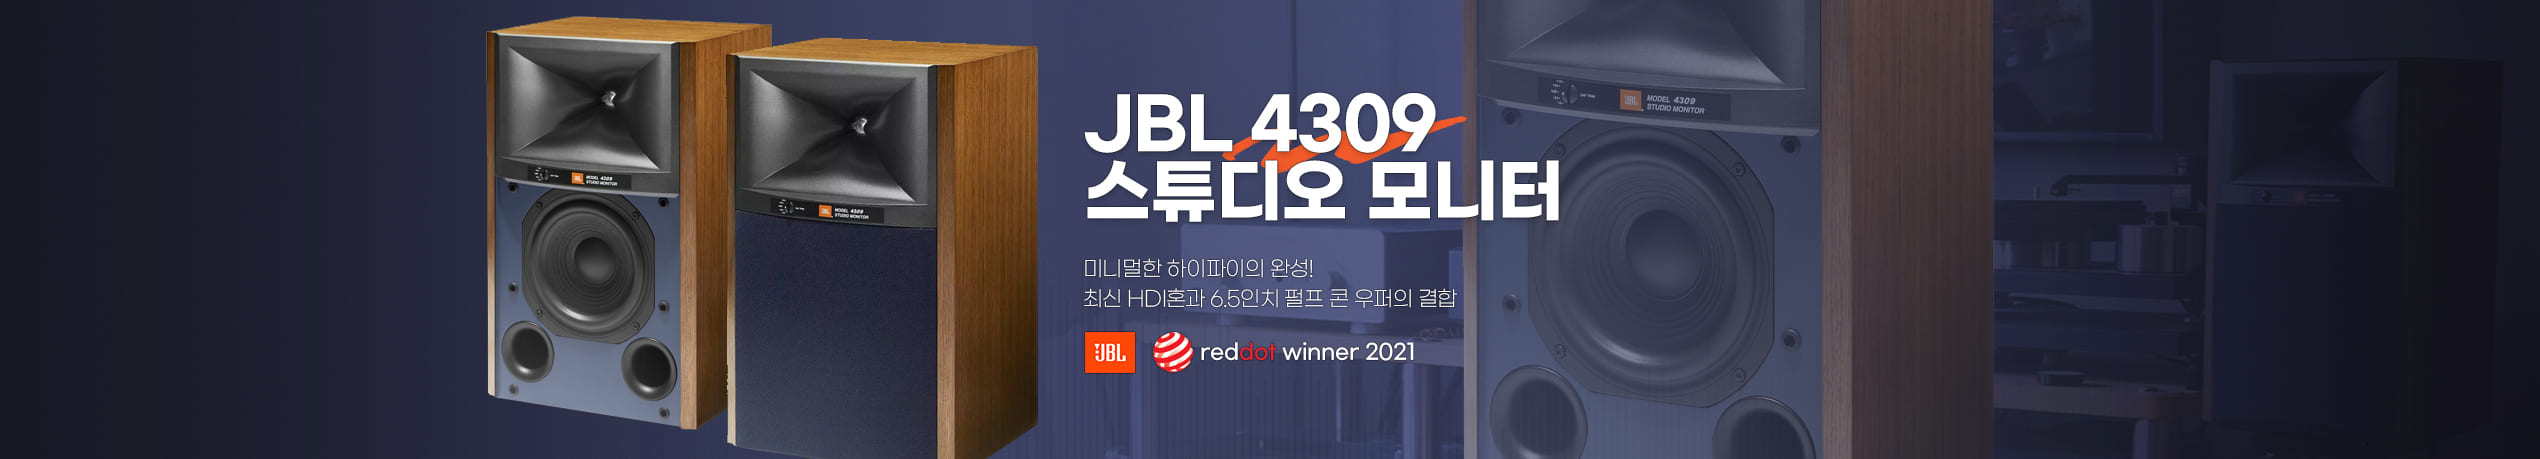 2. JBL4309